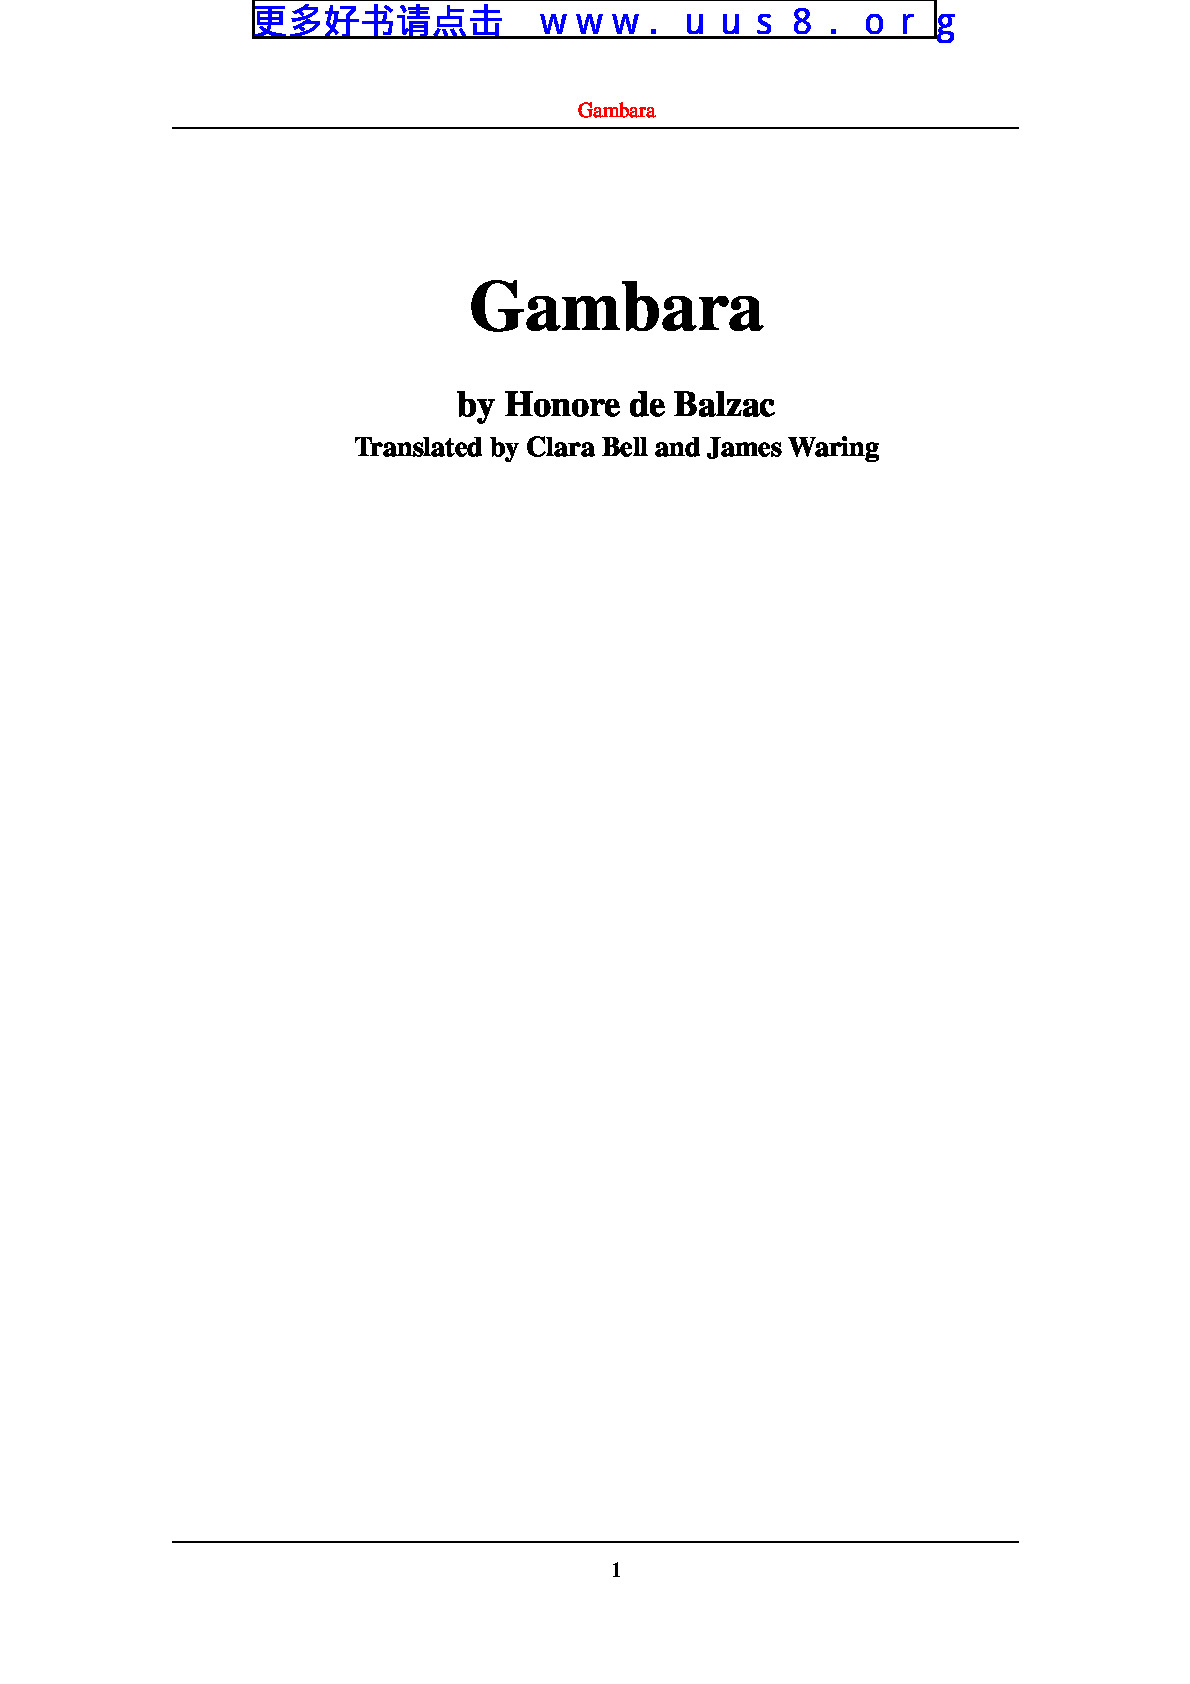 Gambara(刚巴拉)